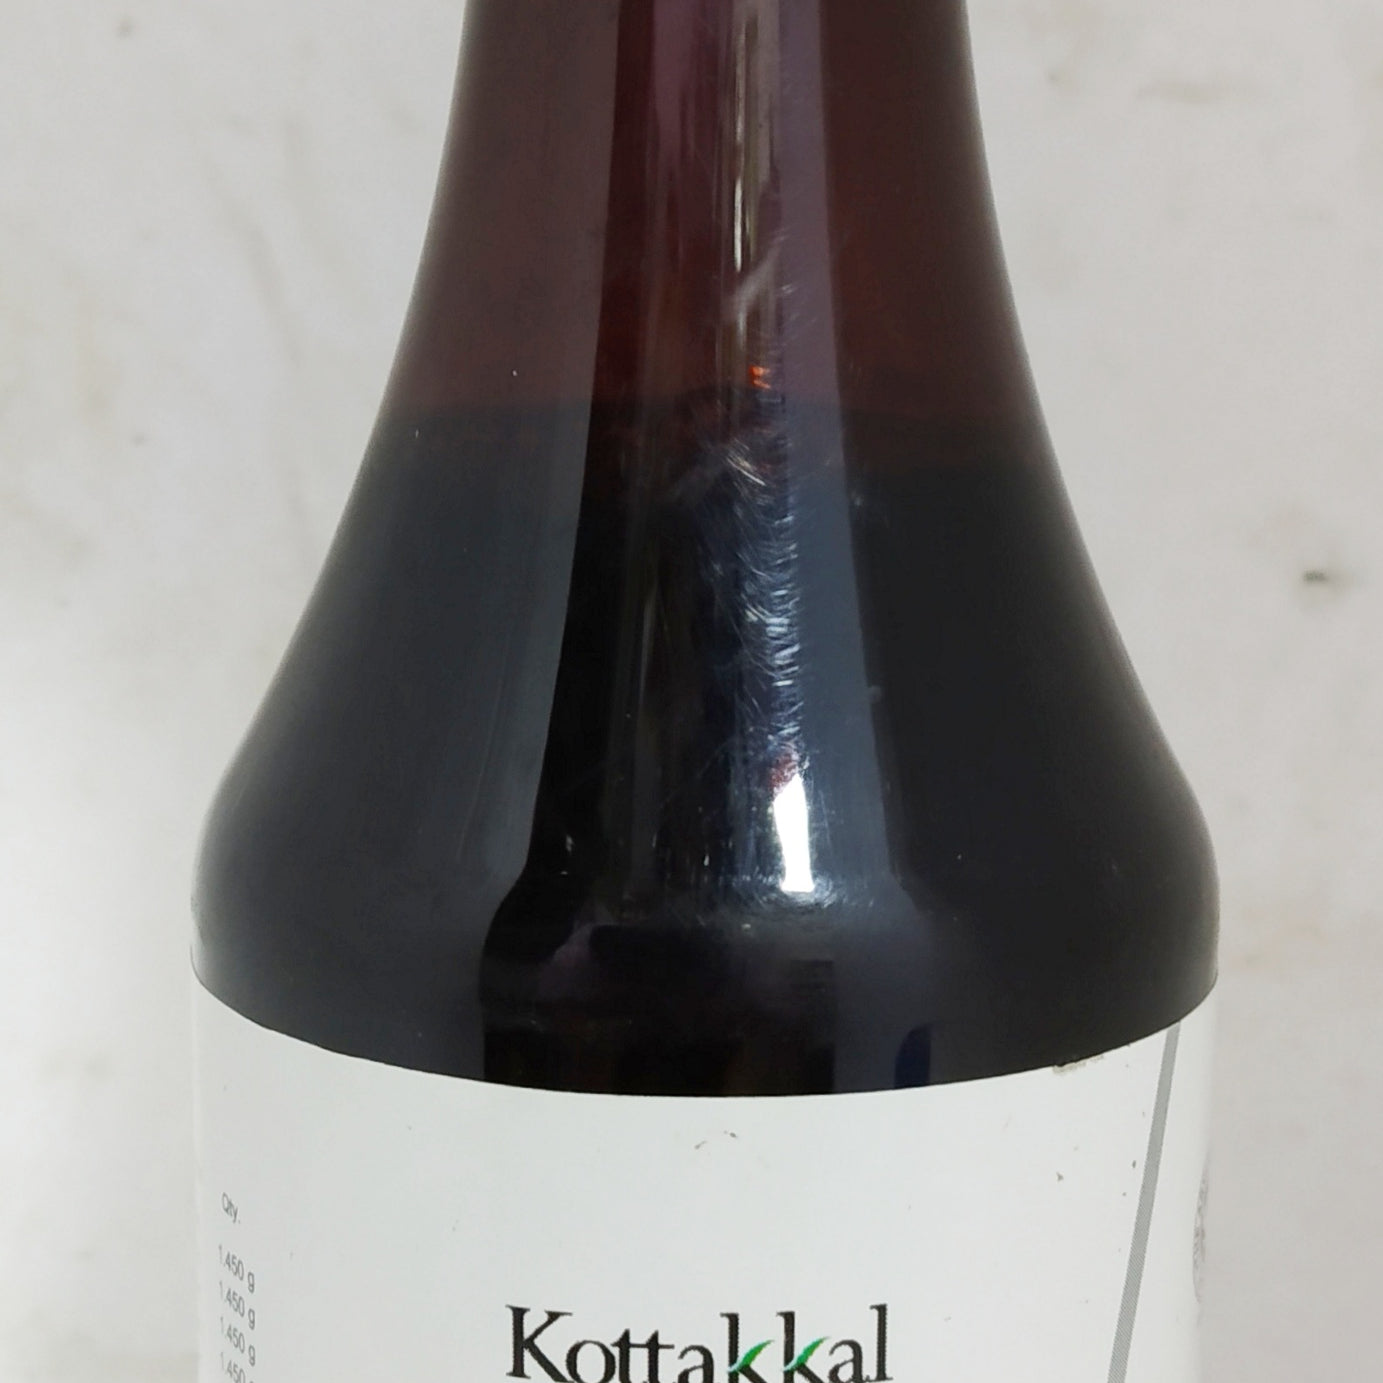 Shop Kotakkal Geniekot Syrup 200ml at price 145.00 from Kottakkal Online - Ayush Care